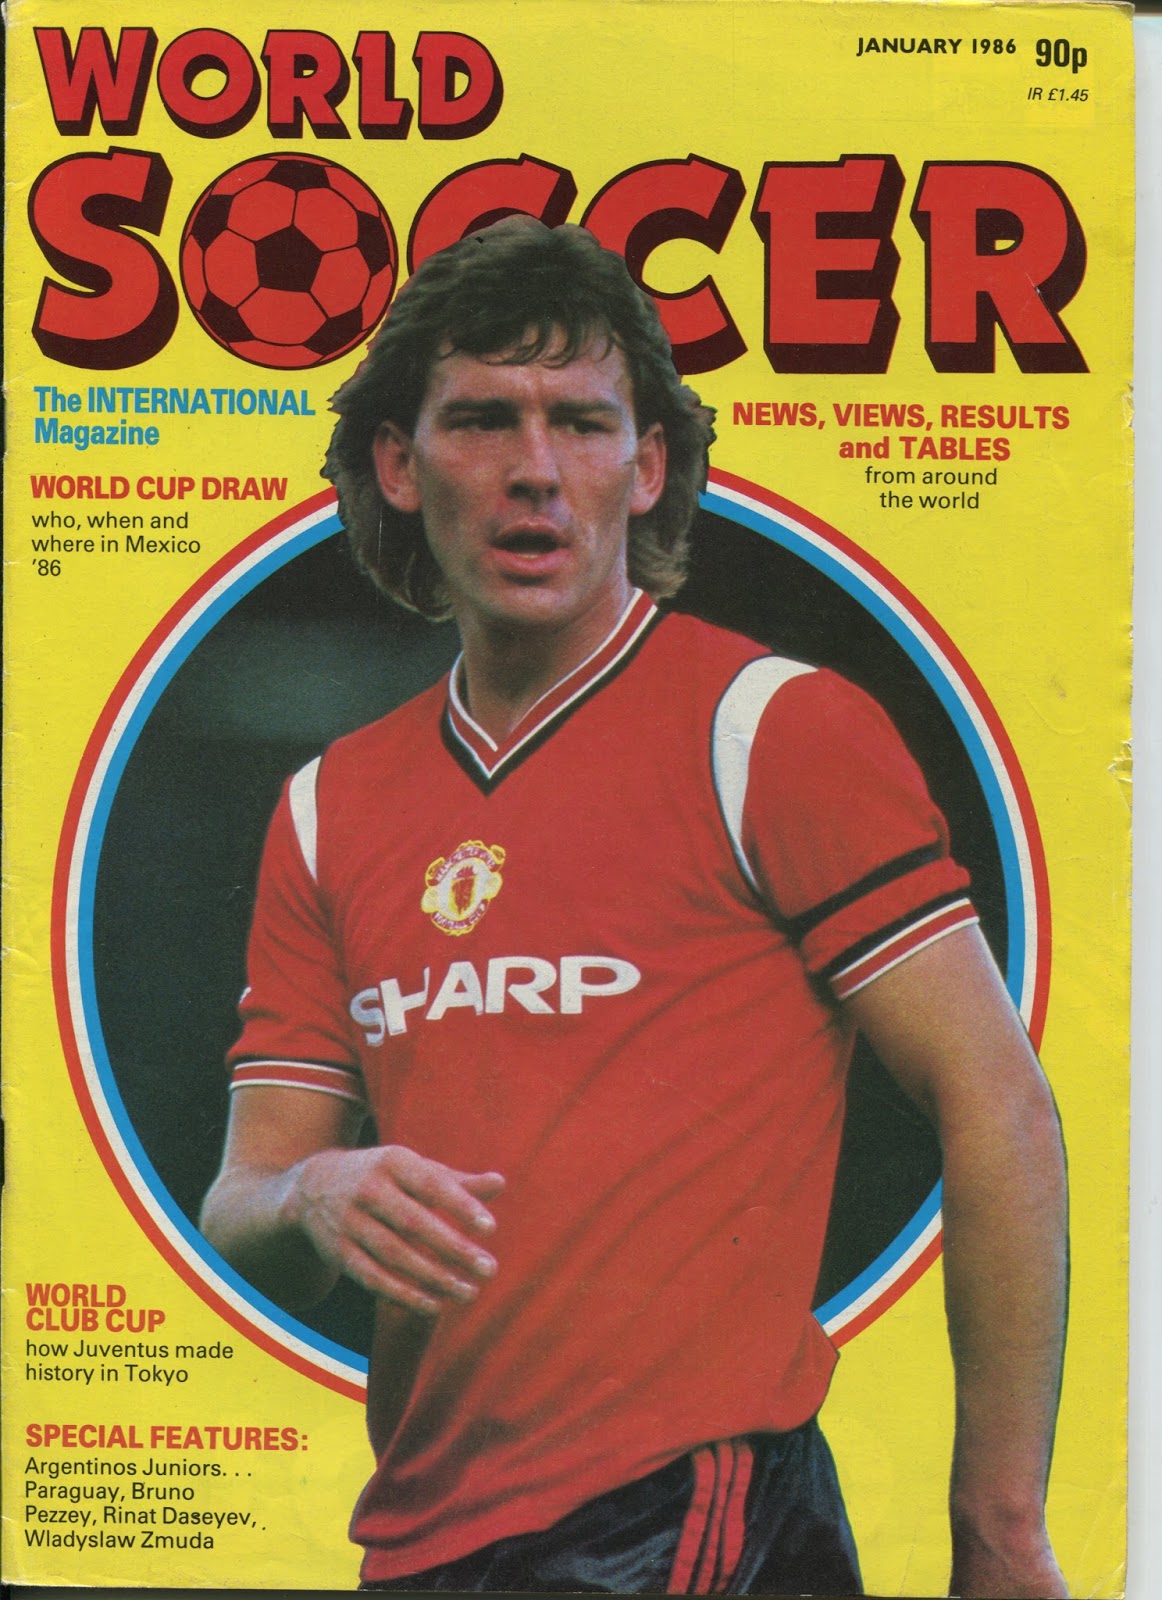 Part magazine. World Soccer журнал 1986. 1986 Журналы. Книга звезды мирового футбола. Bob Soccer журнала.